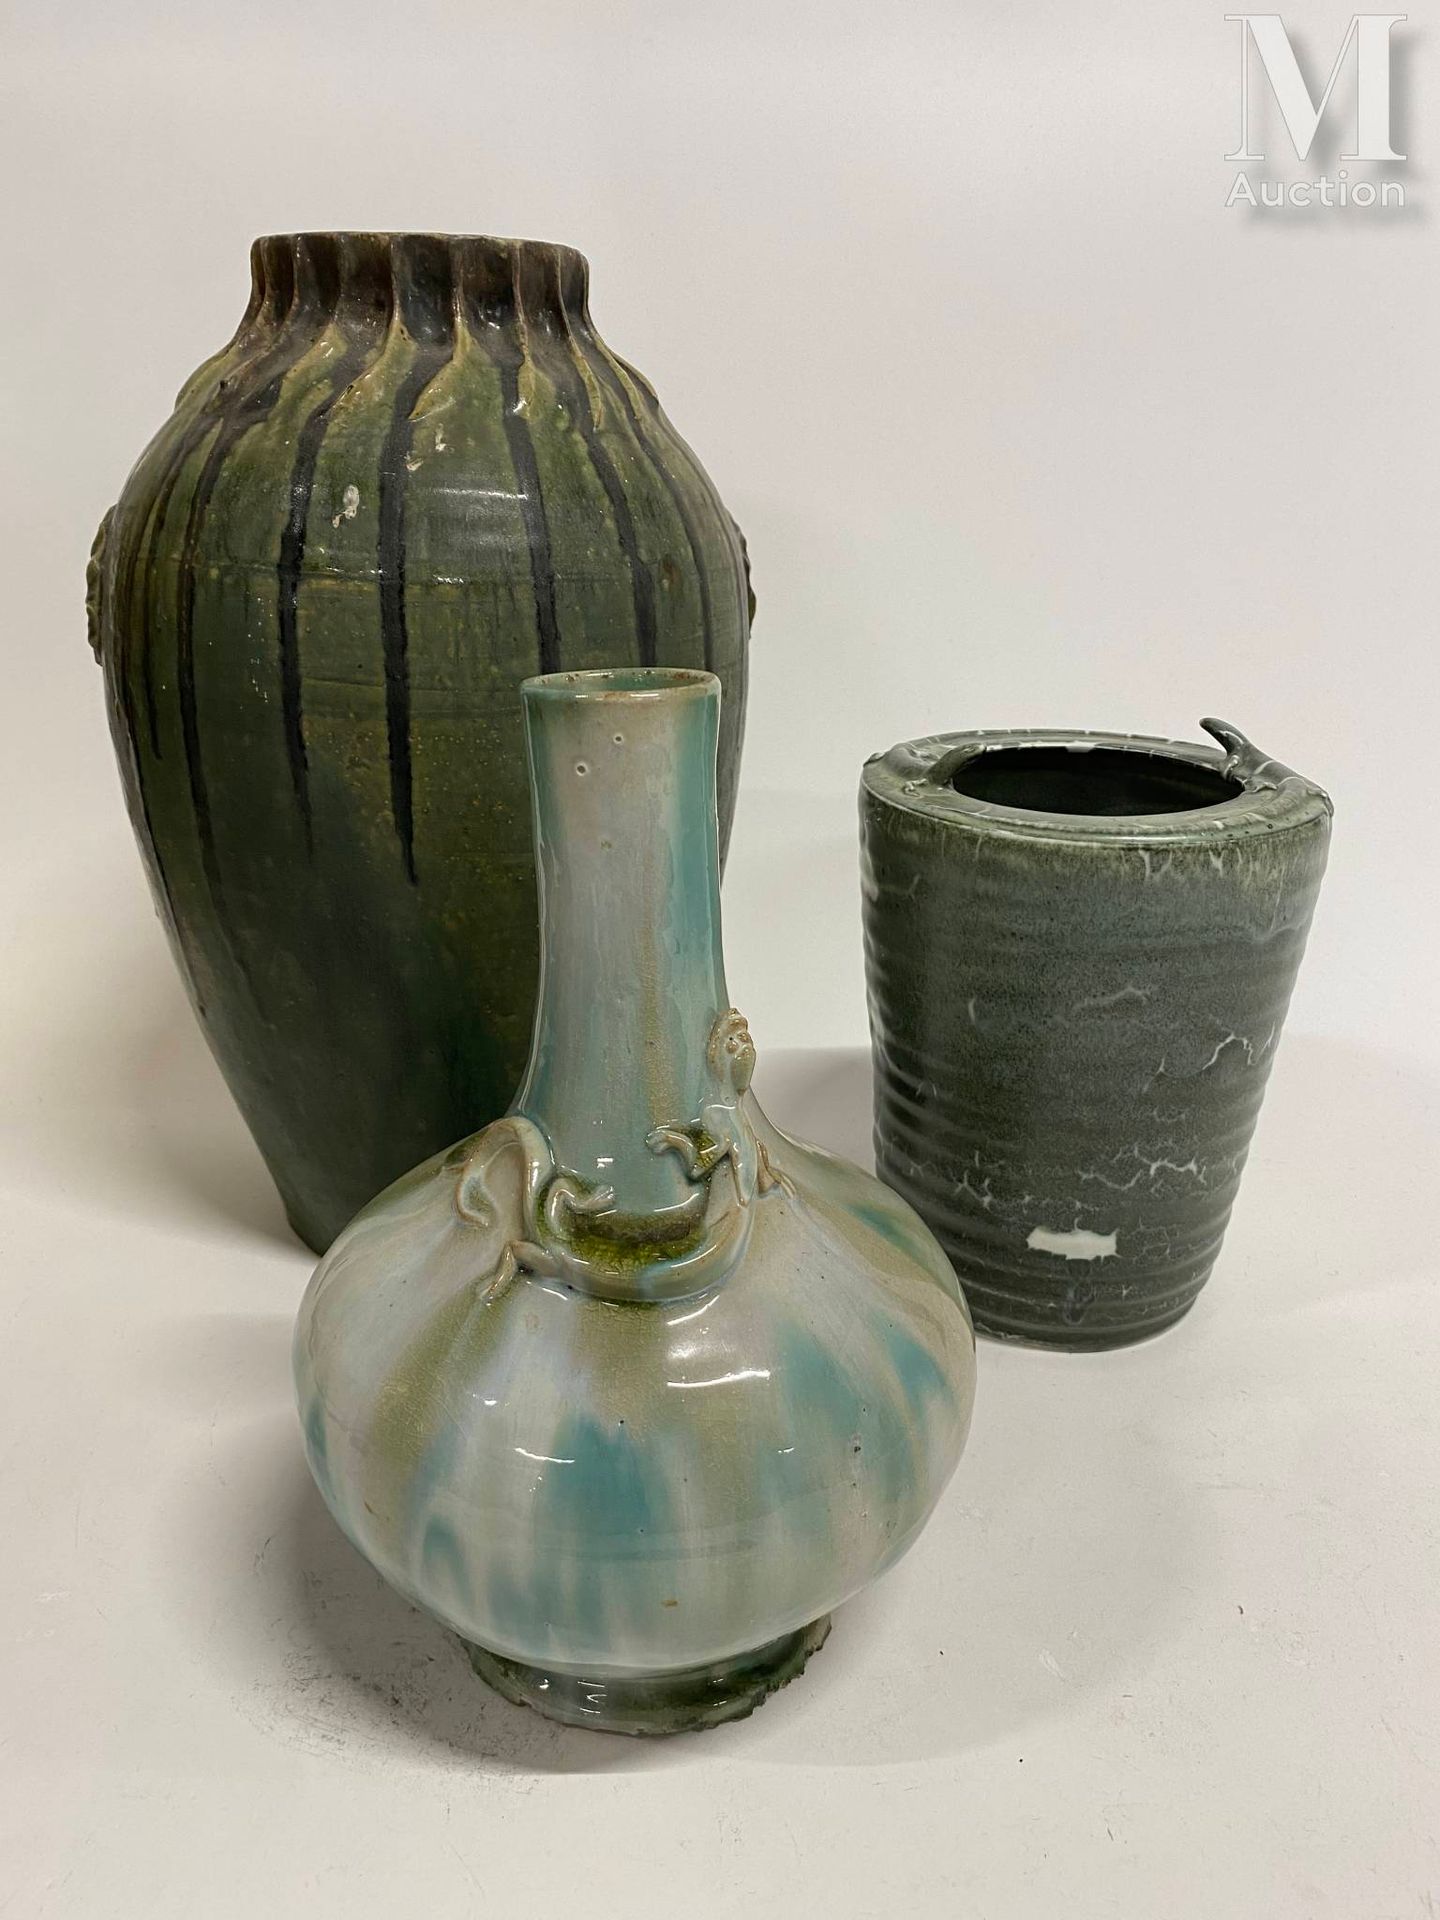 Lot de céramiques diverses eine balusterförmige Vase aus glasiertem Ton mit Schl&hellip;